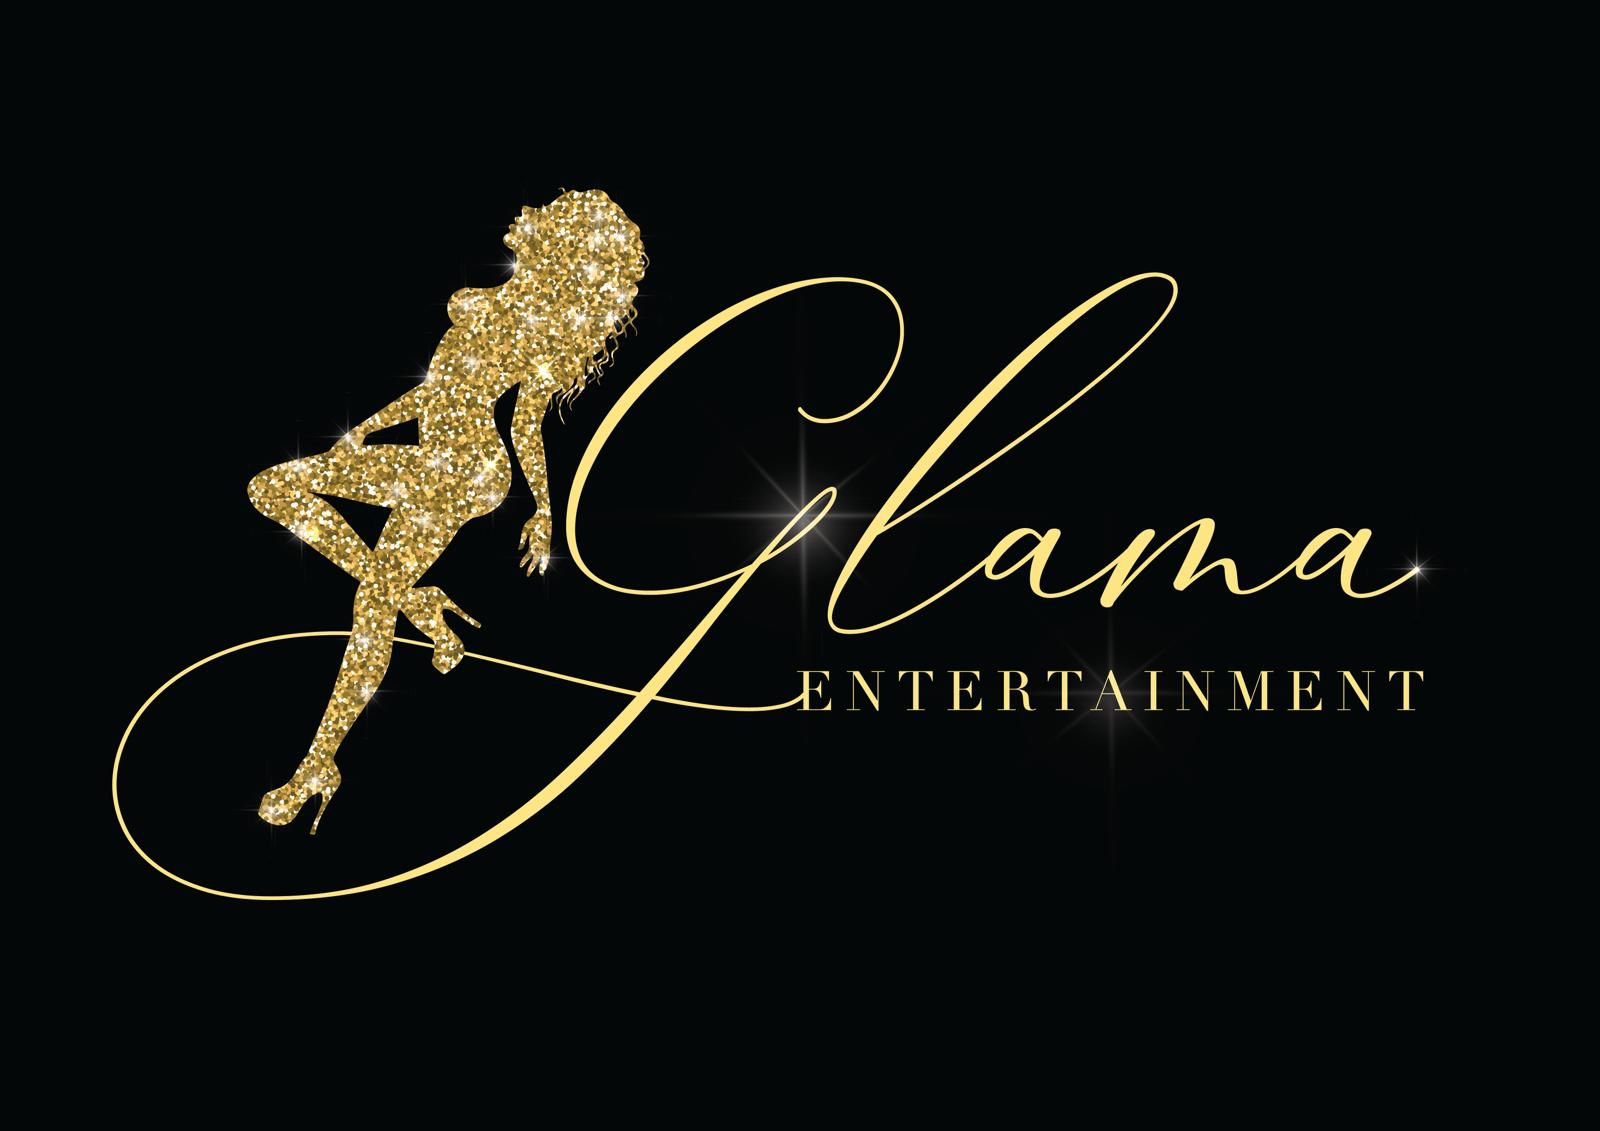 Glama Entertainment